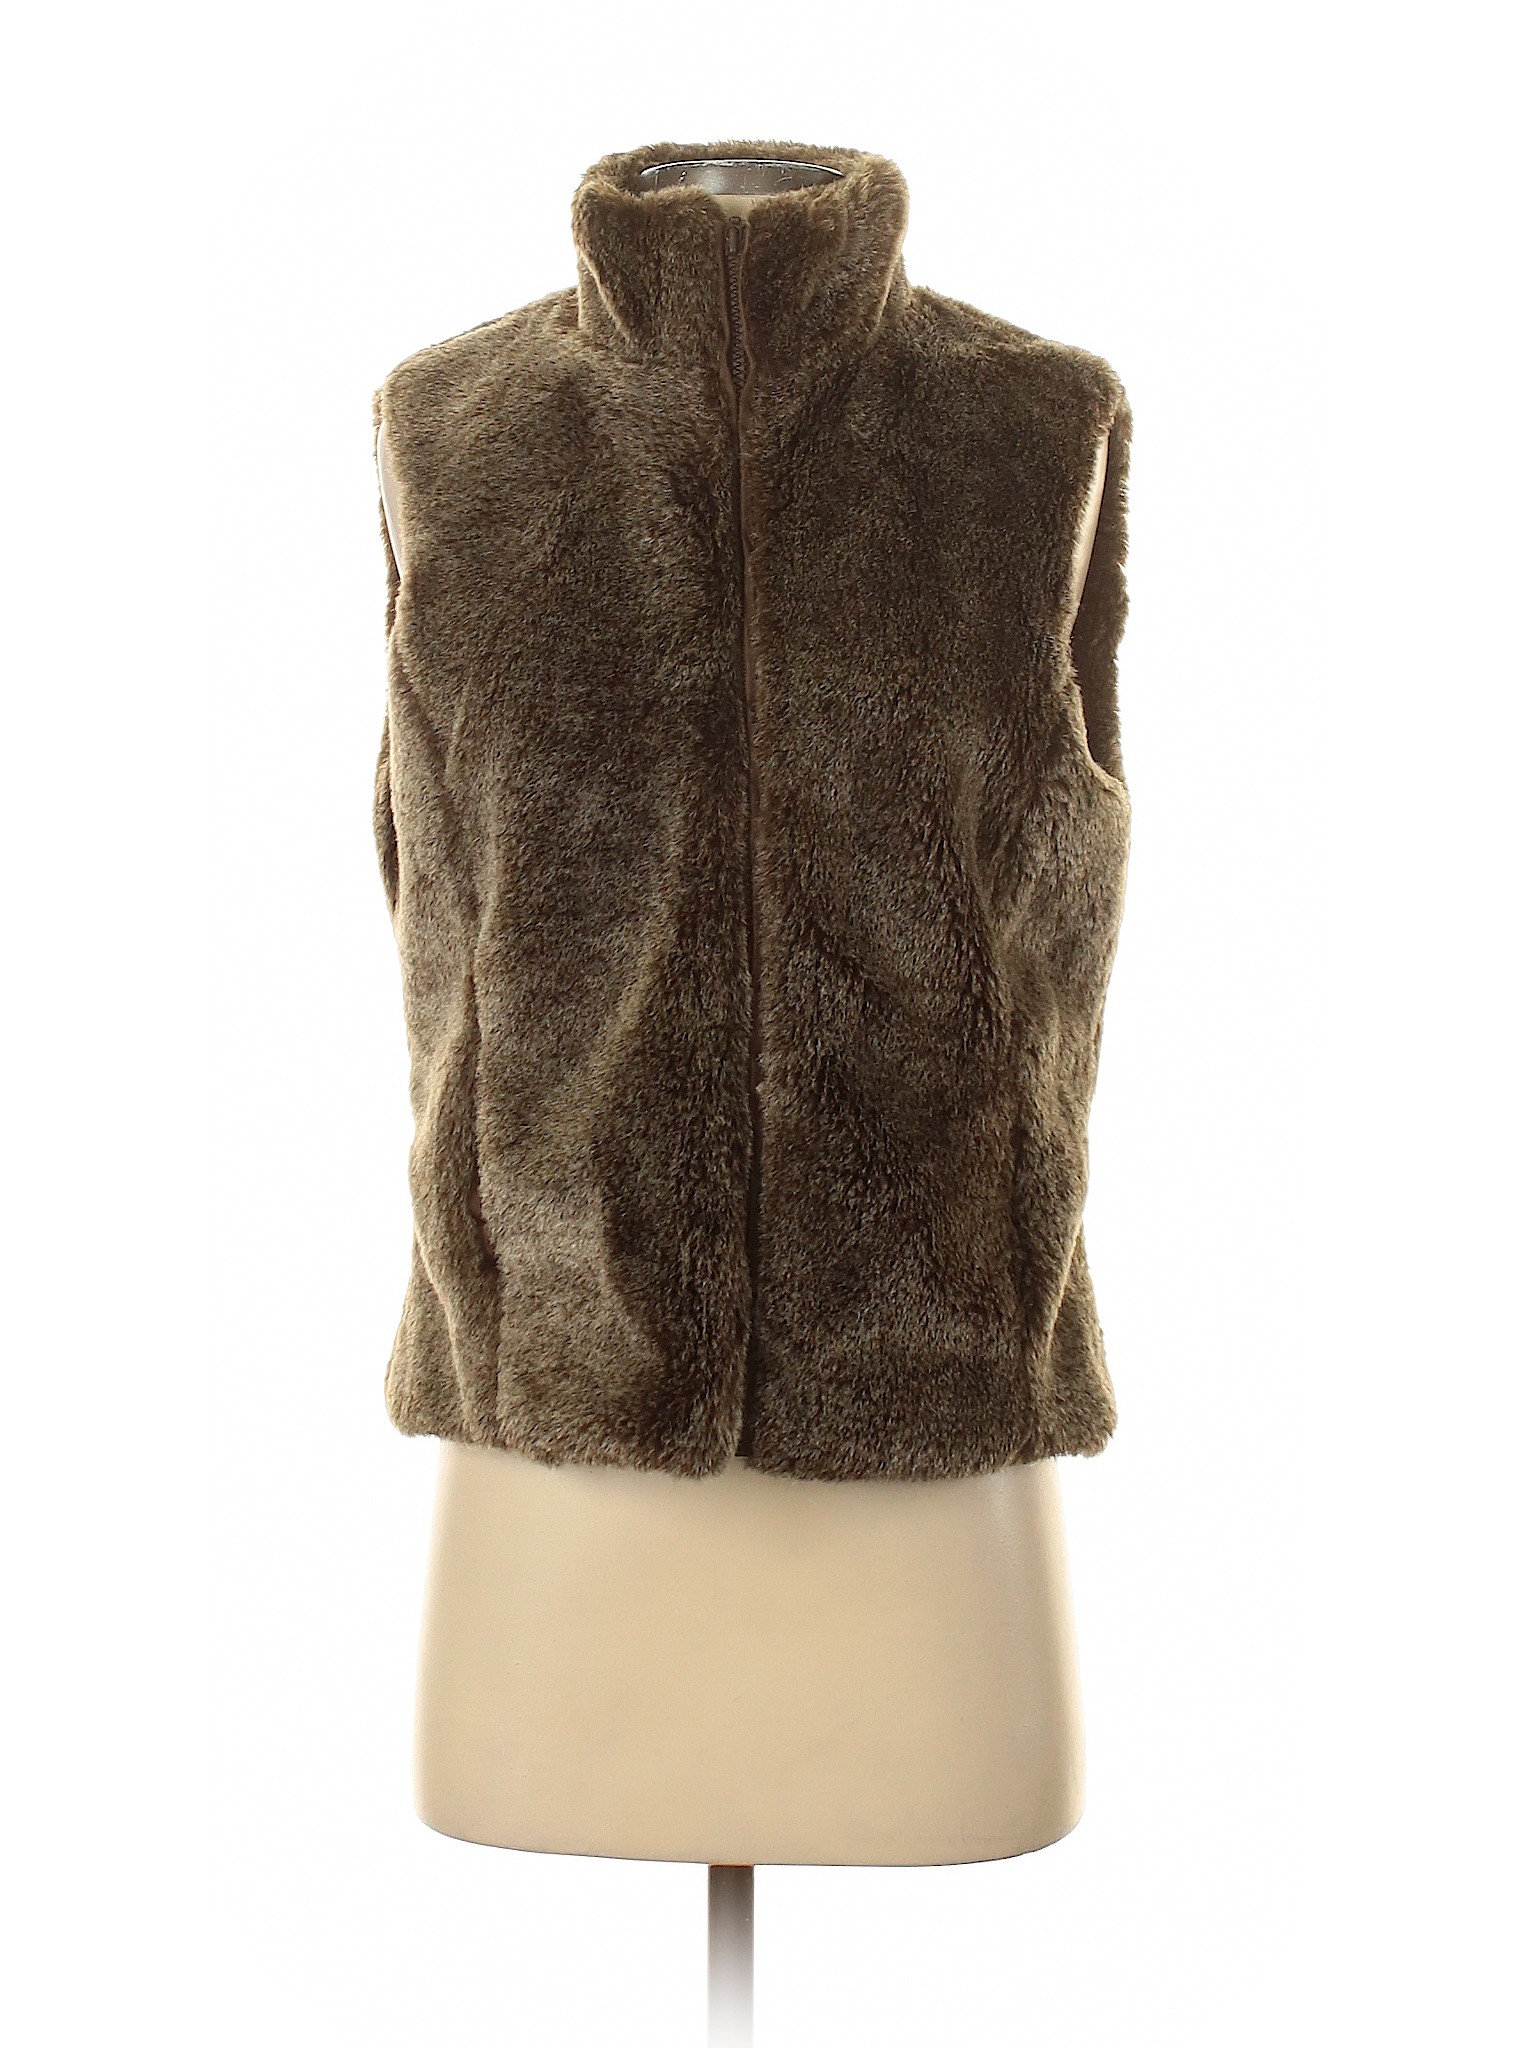 Assorted Brands Women Yellow Faux Fur Vest S | eBay